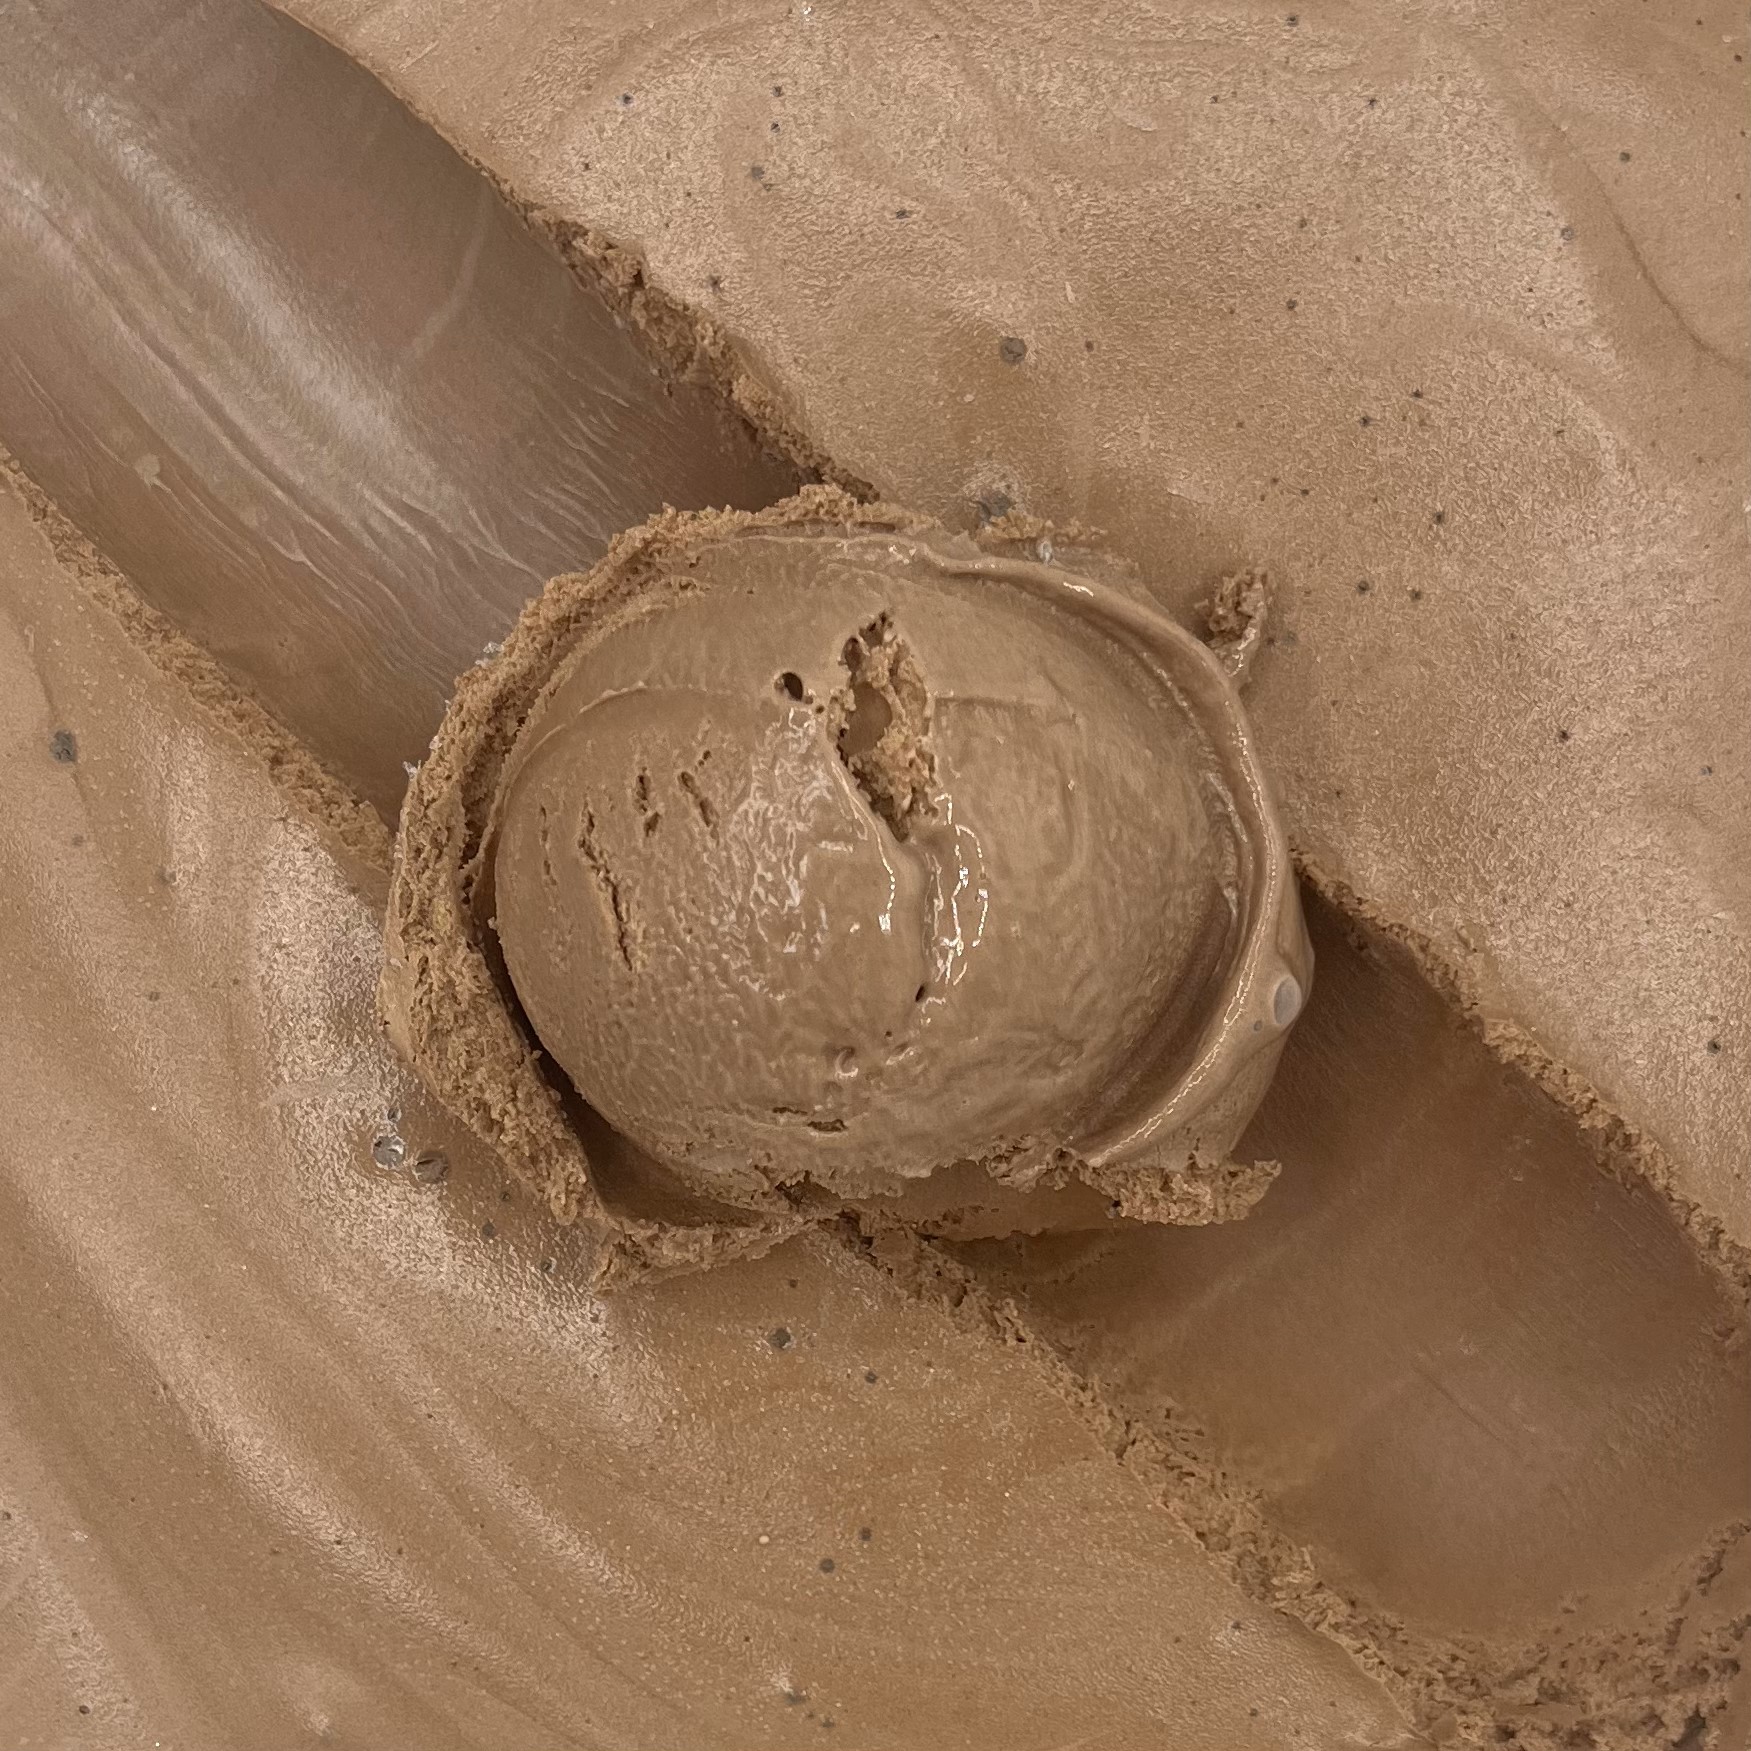 A scoop of Chocolate ice cream